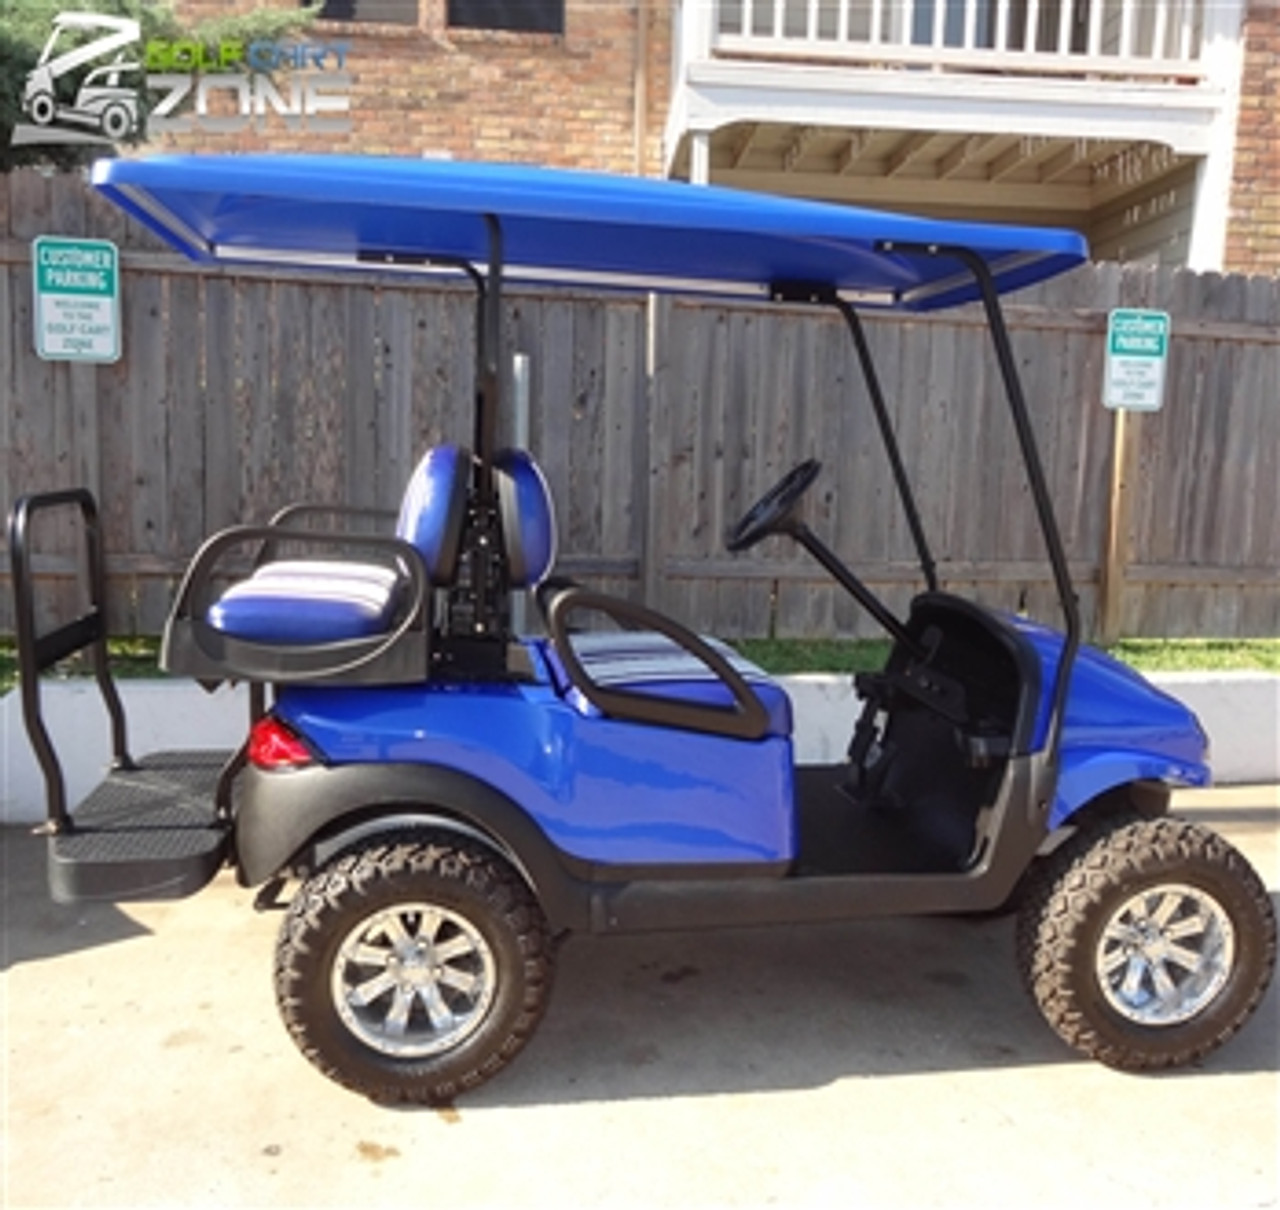 Club Car DS Golf Cart Spartan Body Kit by DoubleTake